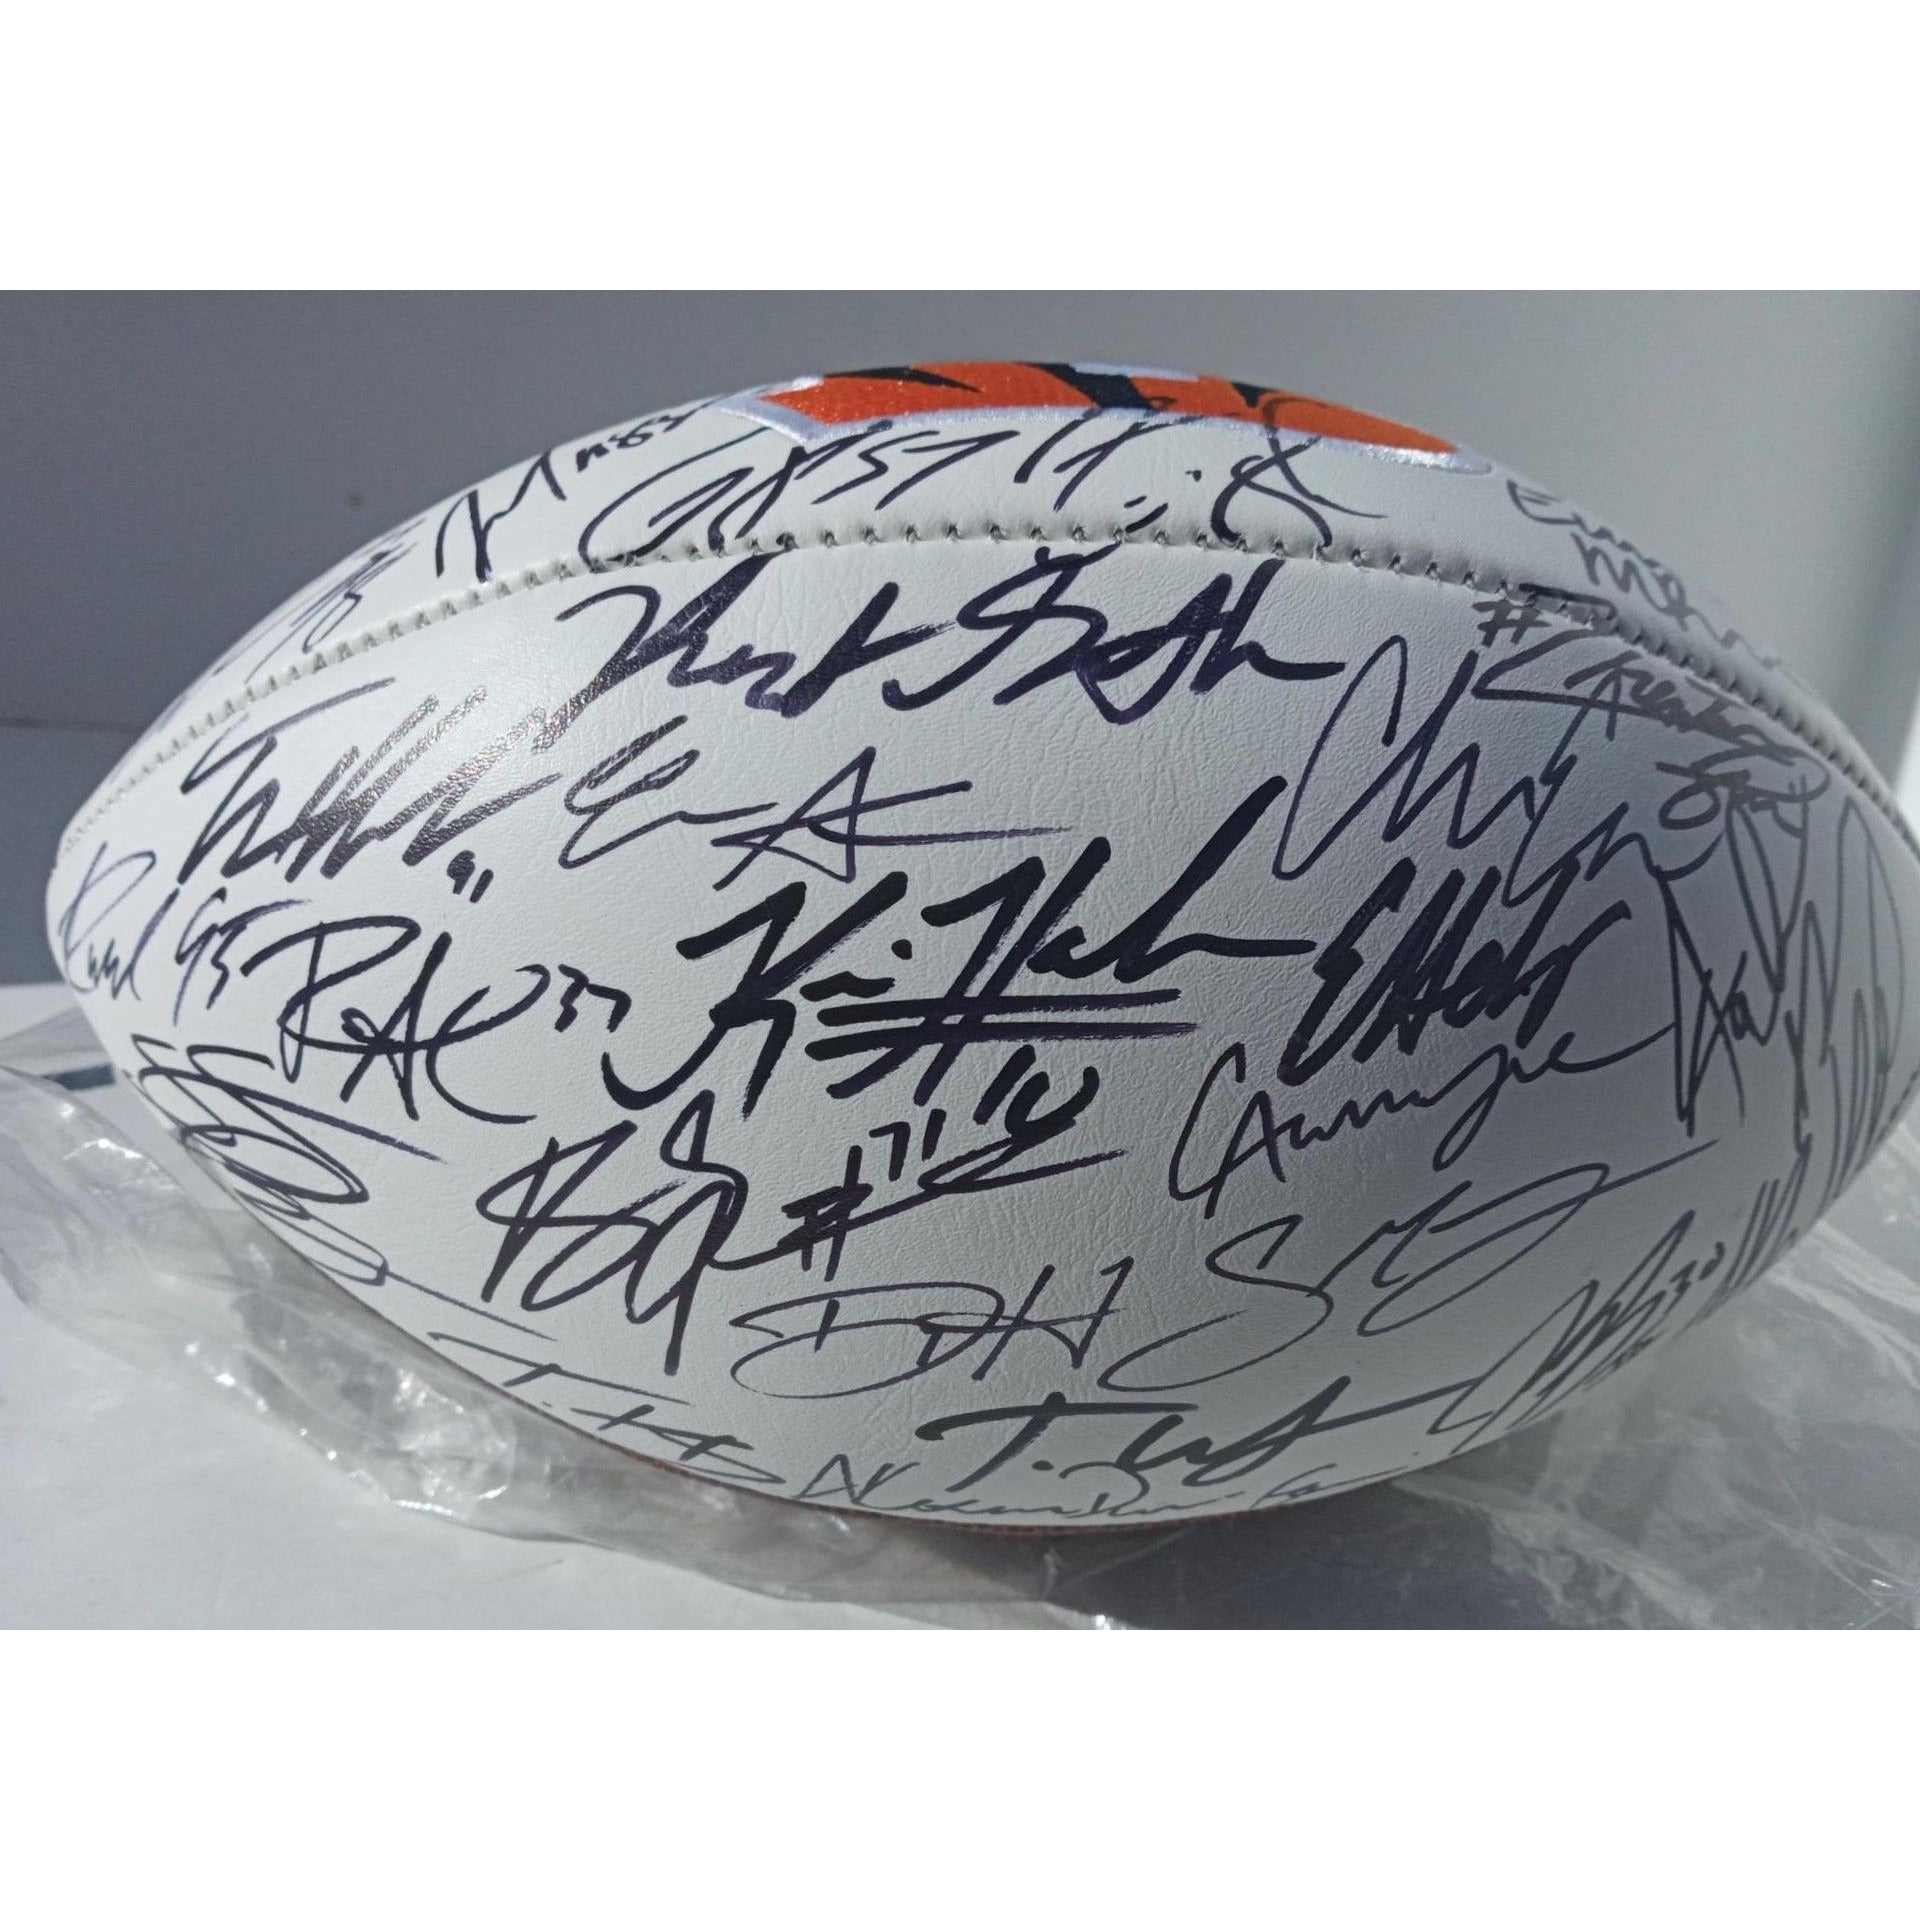 Joe Burrow, Jamarr Chase, Cincinnati Bengals 2021-22 team signed ball with proof